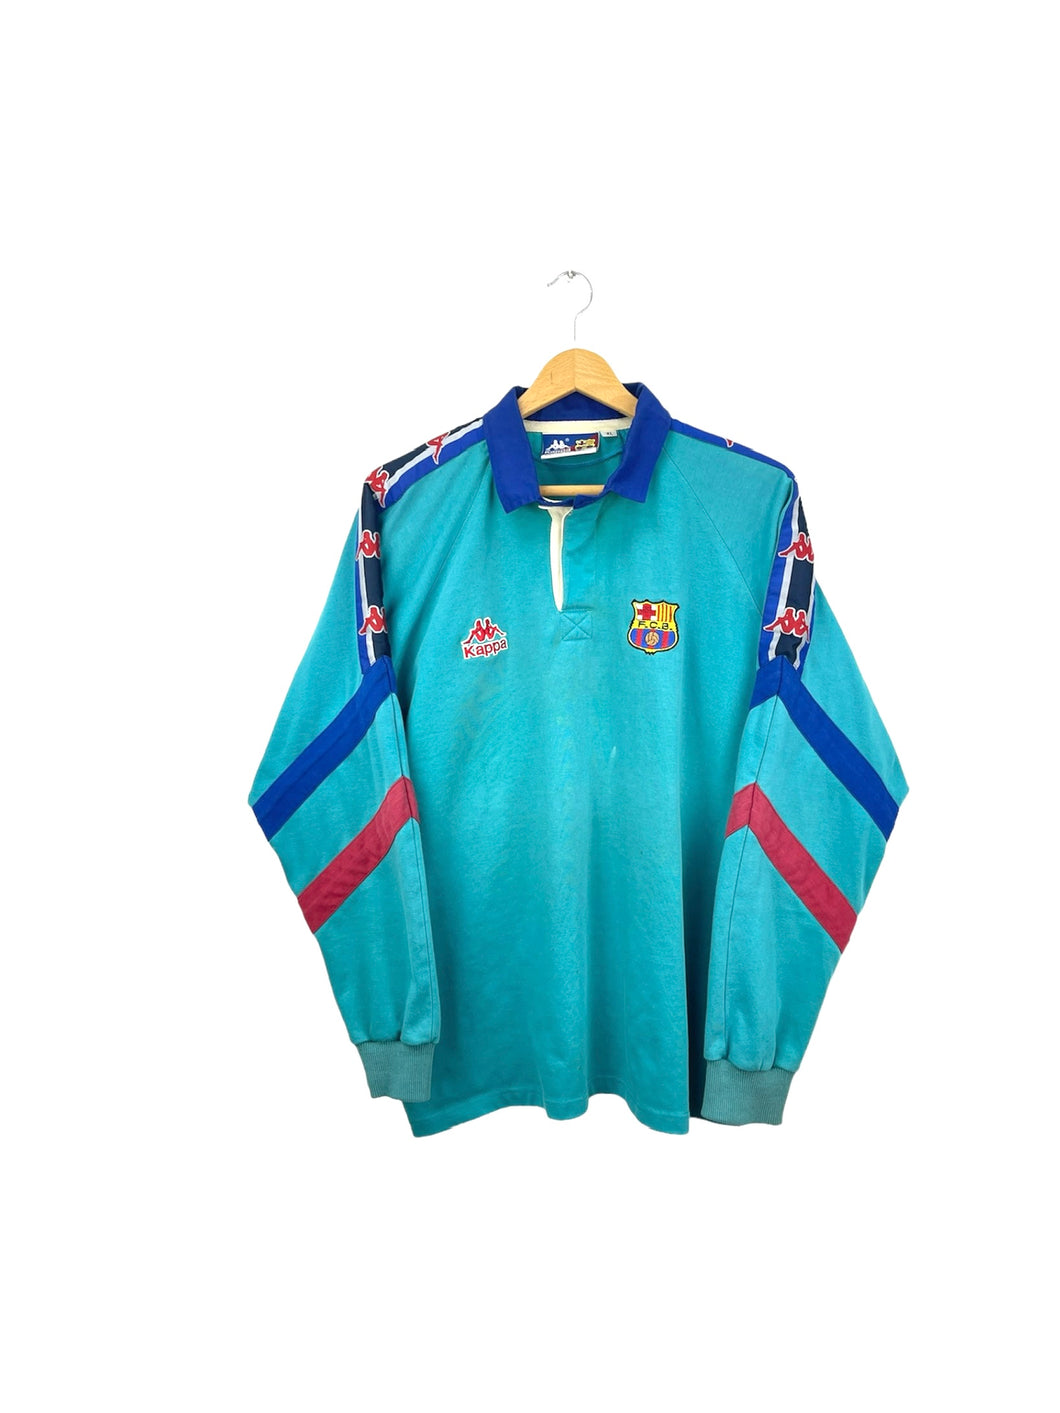 Kappa 1996 F.C Barcelona Sweatshirt - XLarge